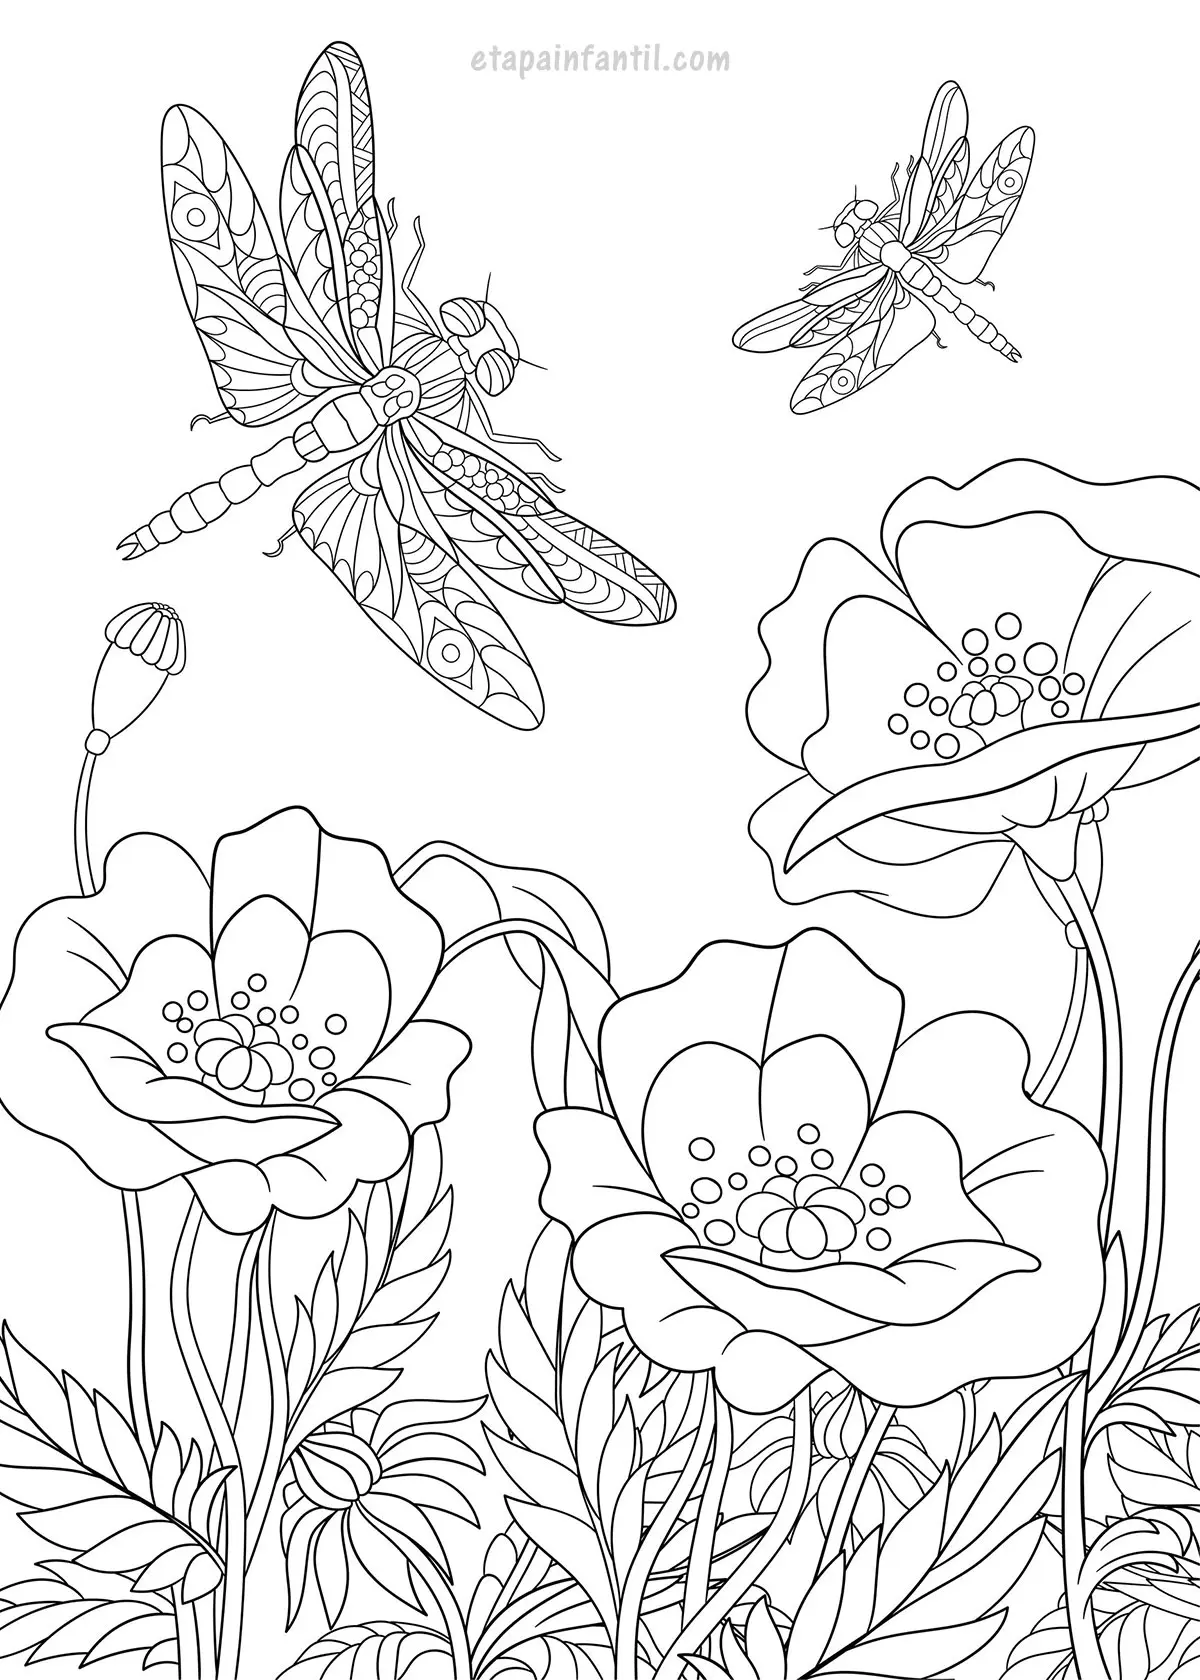 Dibujo de libélulas volando alrededor de flores de amapola para colorear